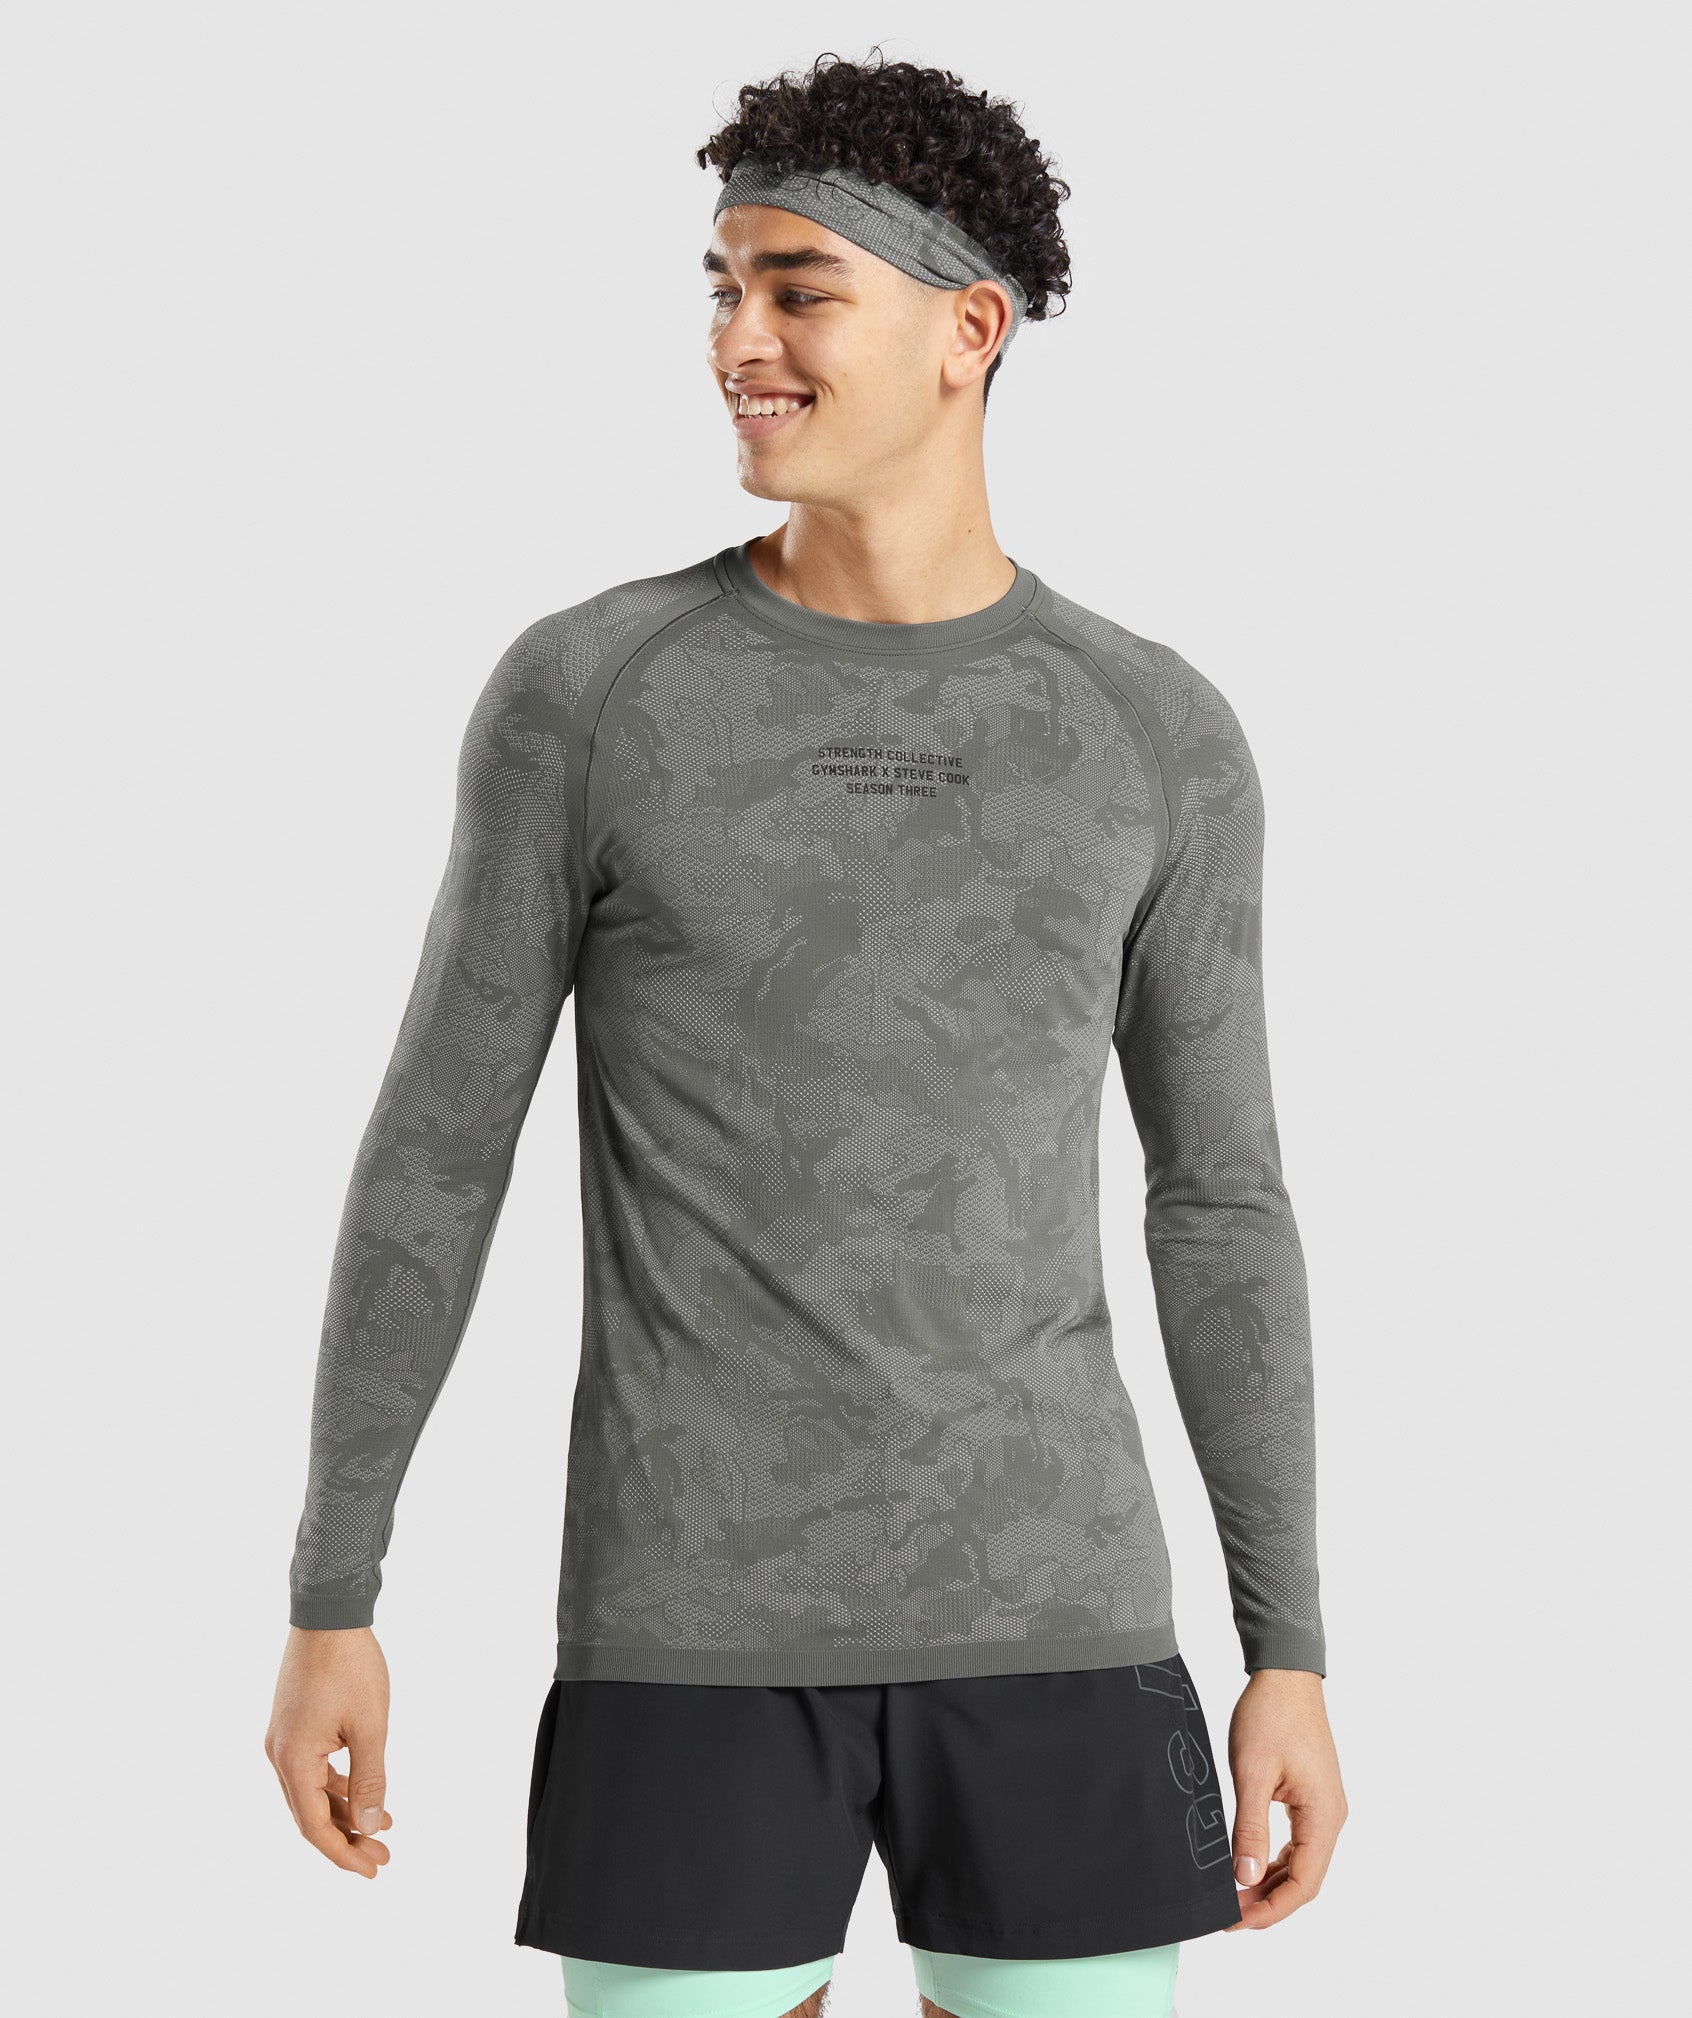 Gymshark//Steve Cook Long Sleeve Seamless T-Shirt in Charcoal Grey/Smokey Grey - view 1